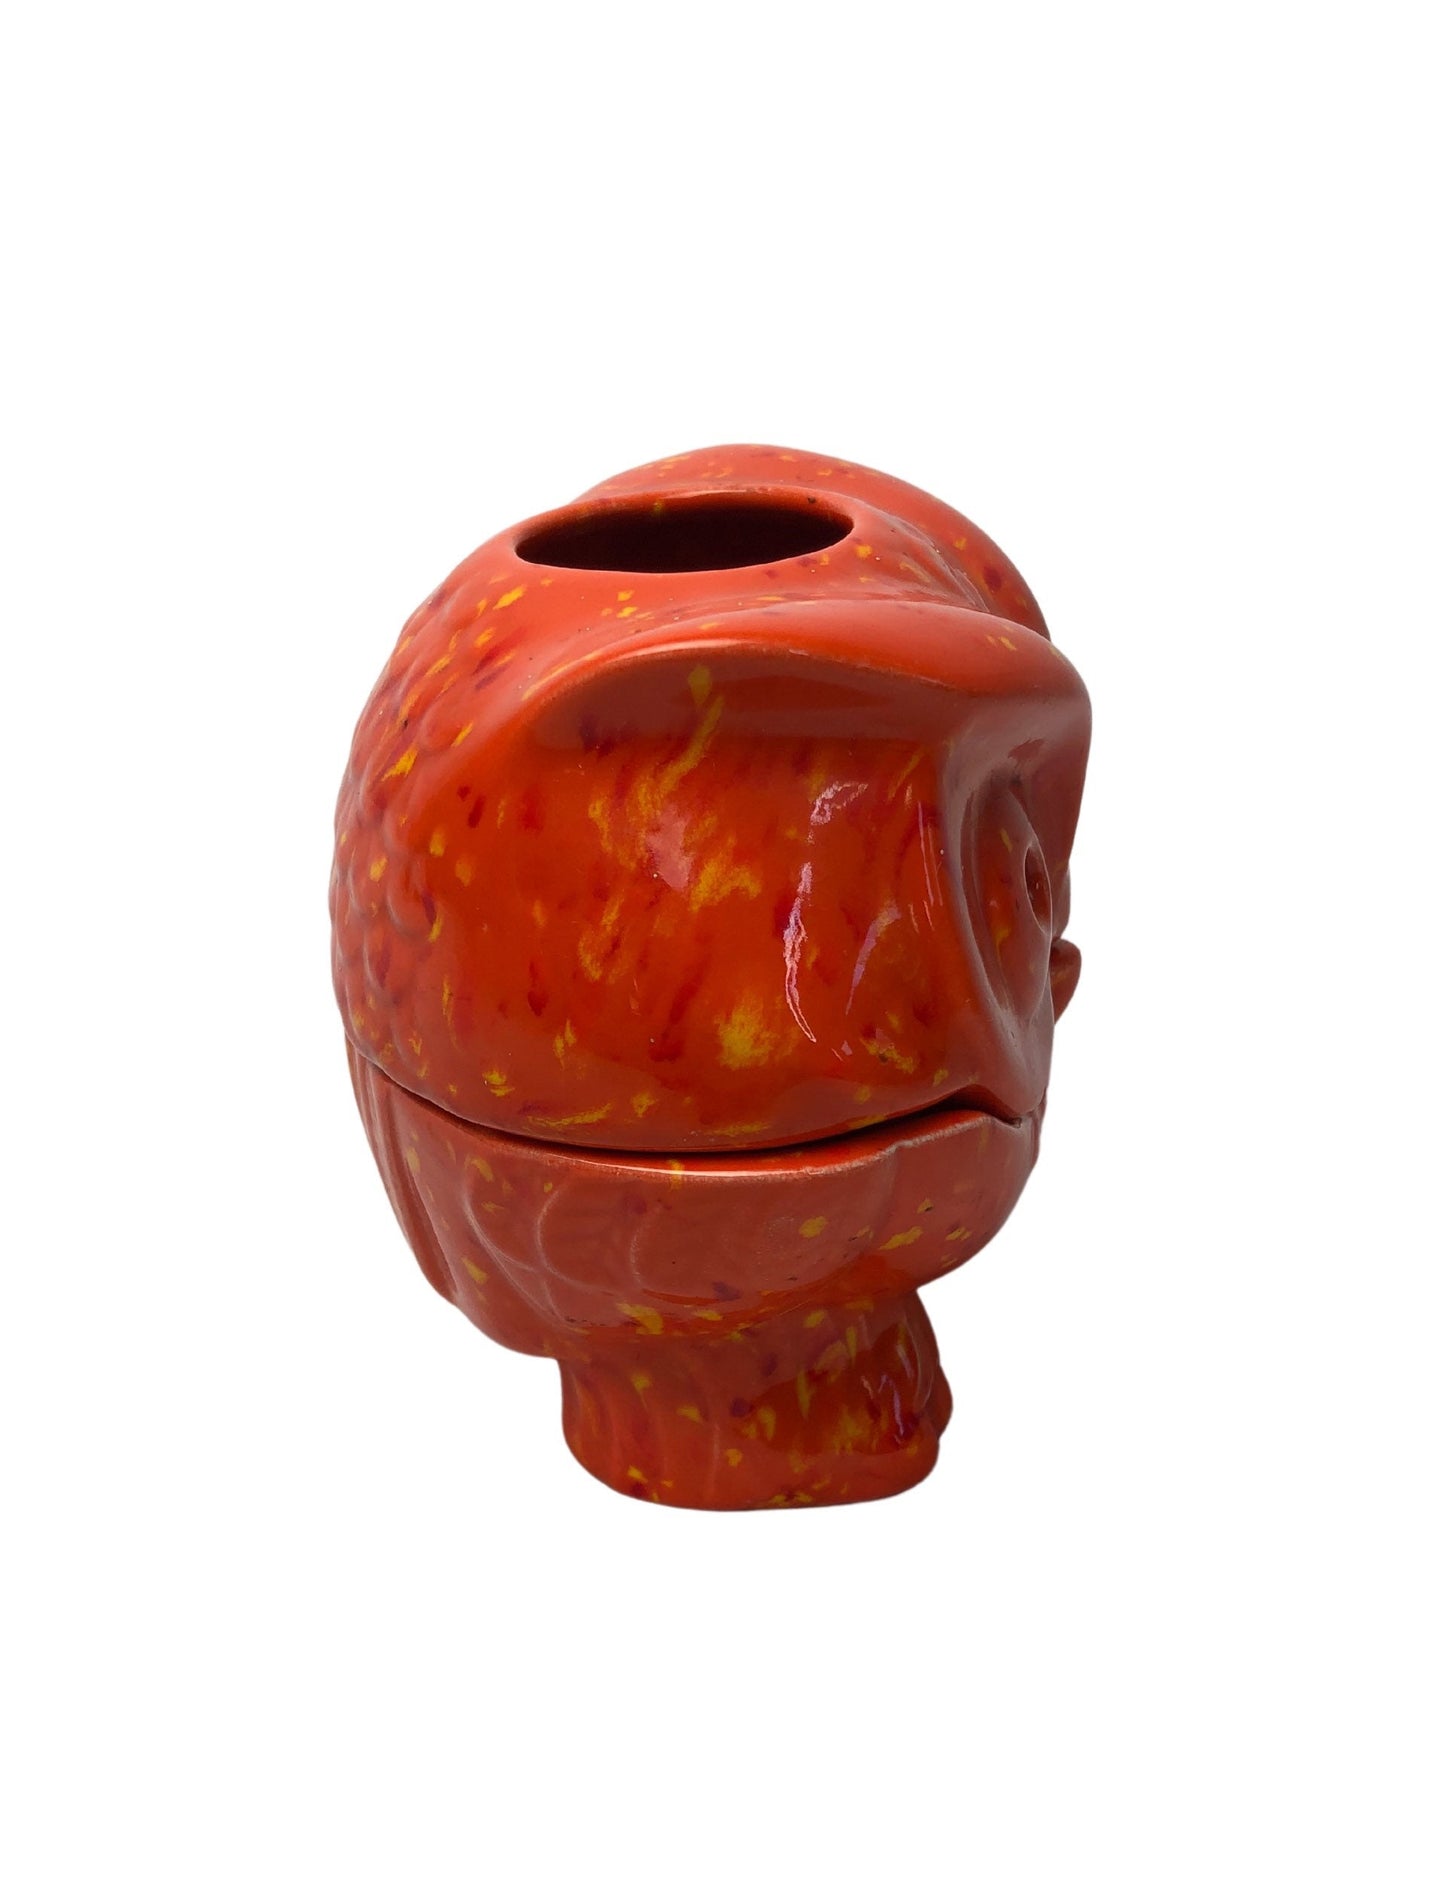 70’s Orange Glazed Ceramic OWL Halloween Votive Candle Holder